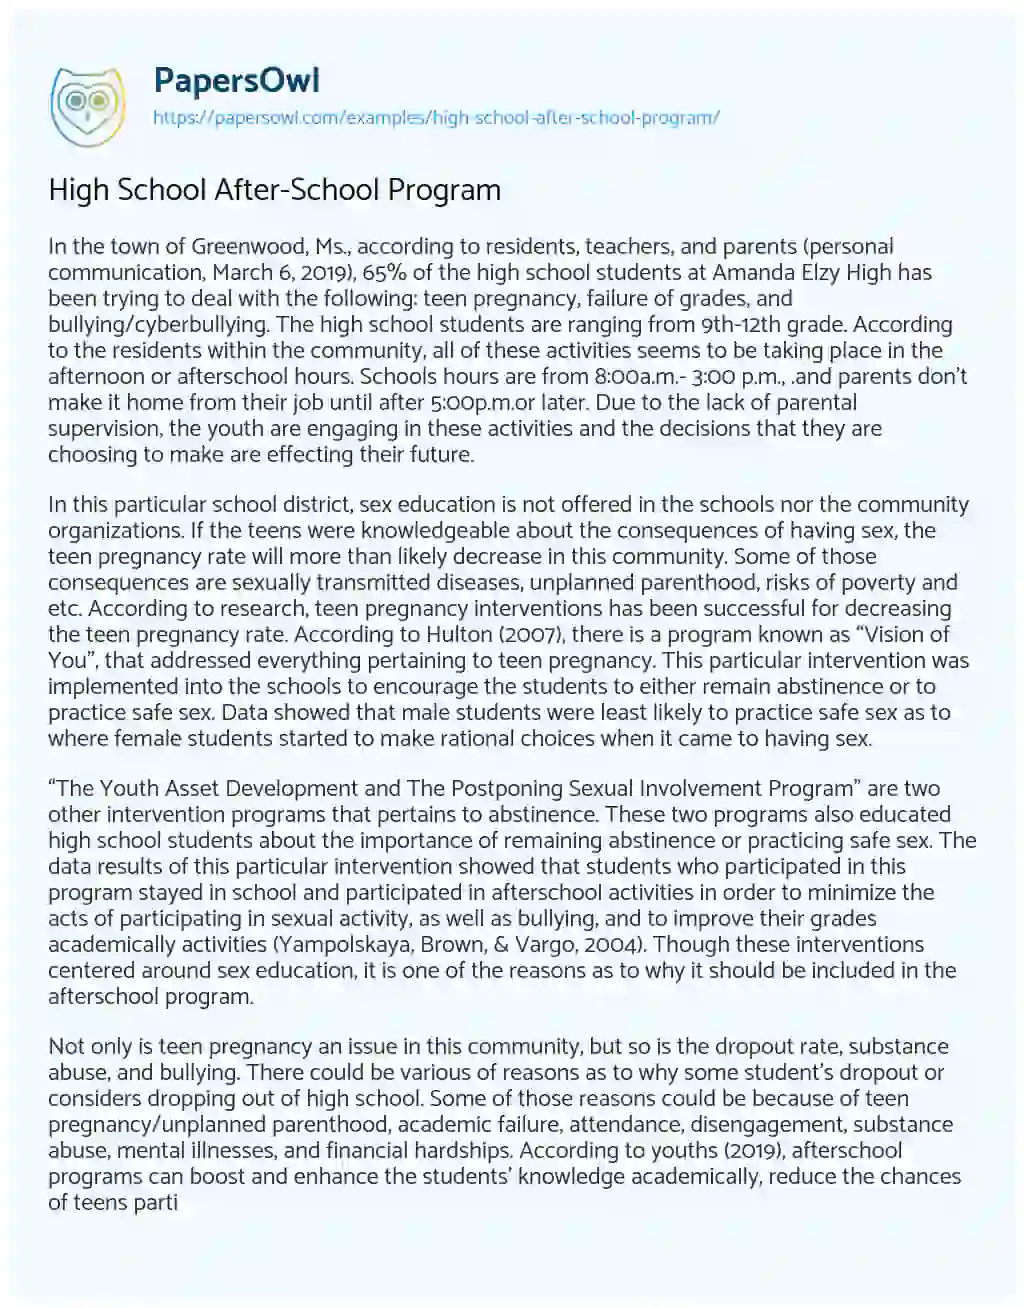 Essay on High School After-School Program